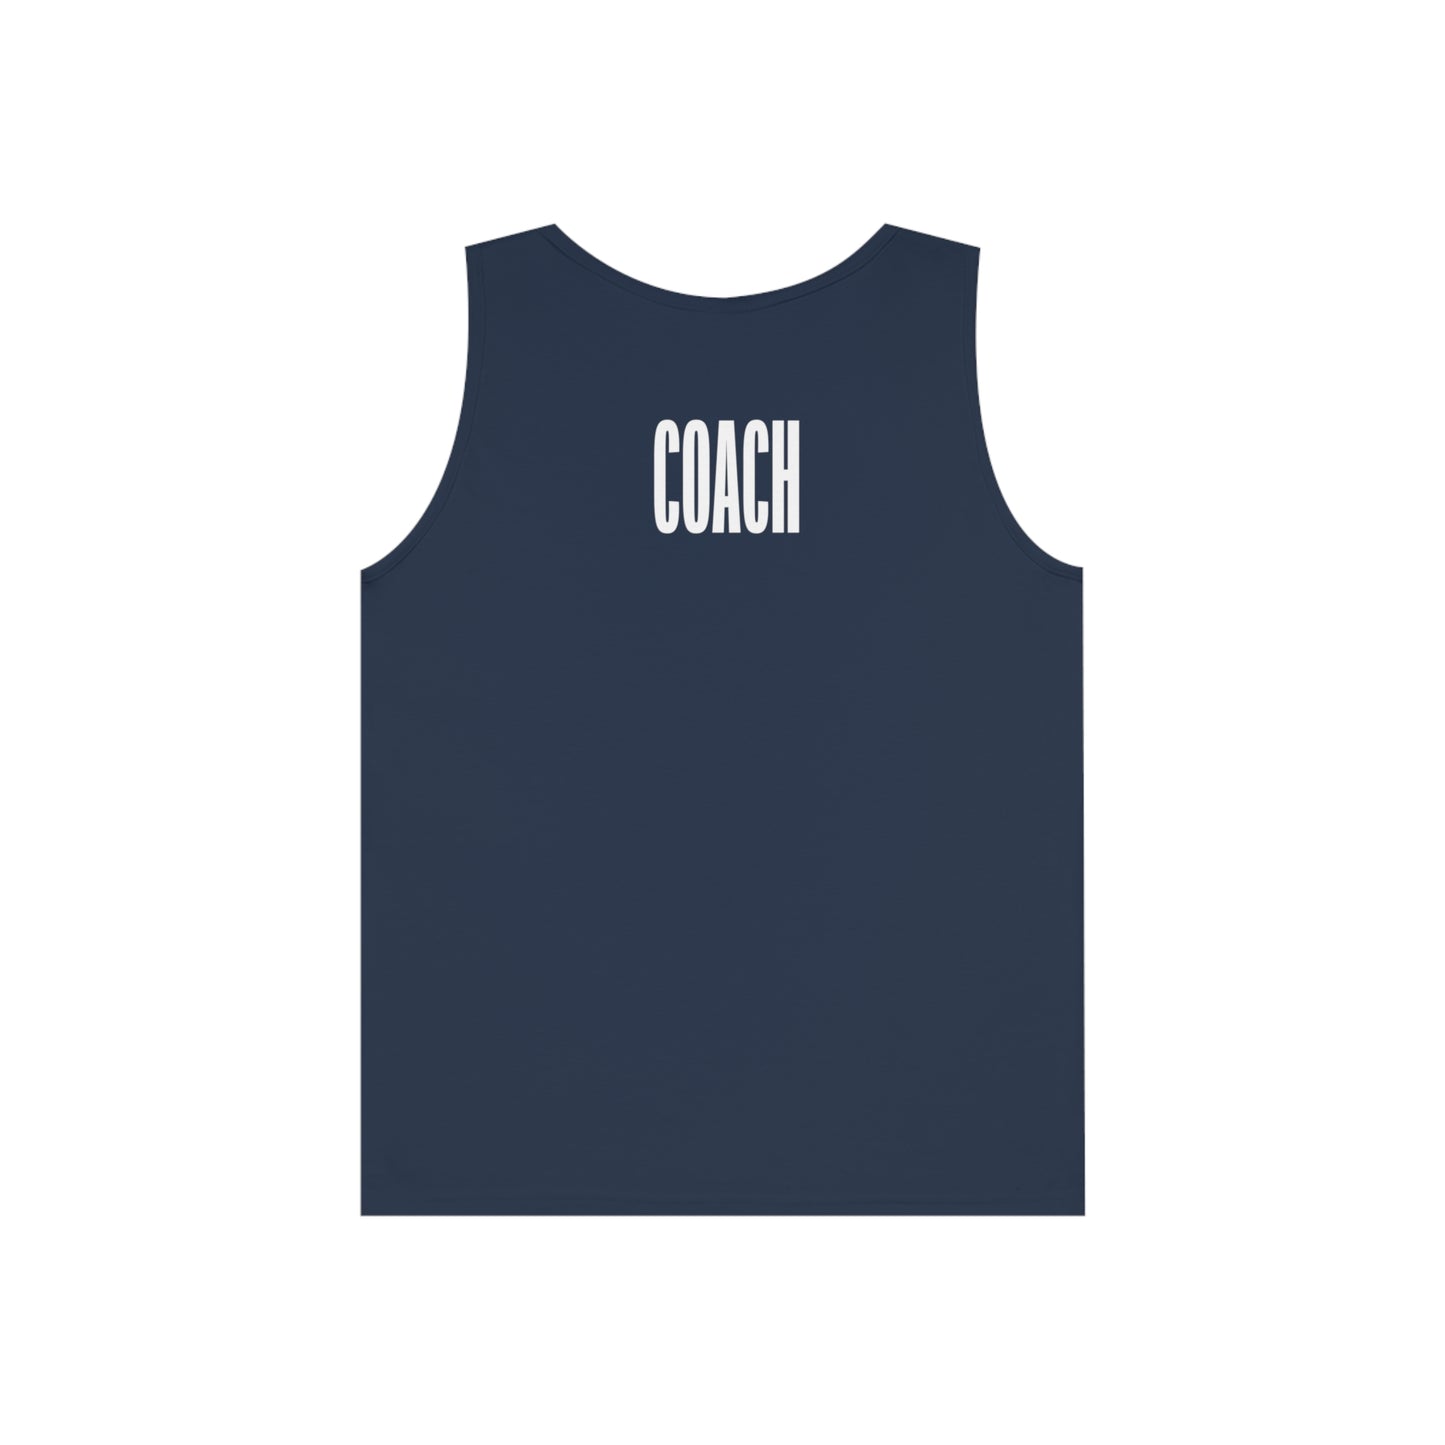 Coach’s Heavy Cotton Tank Top